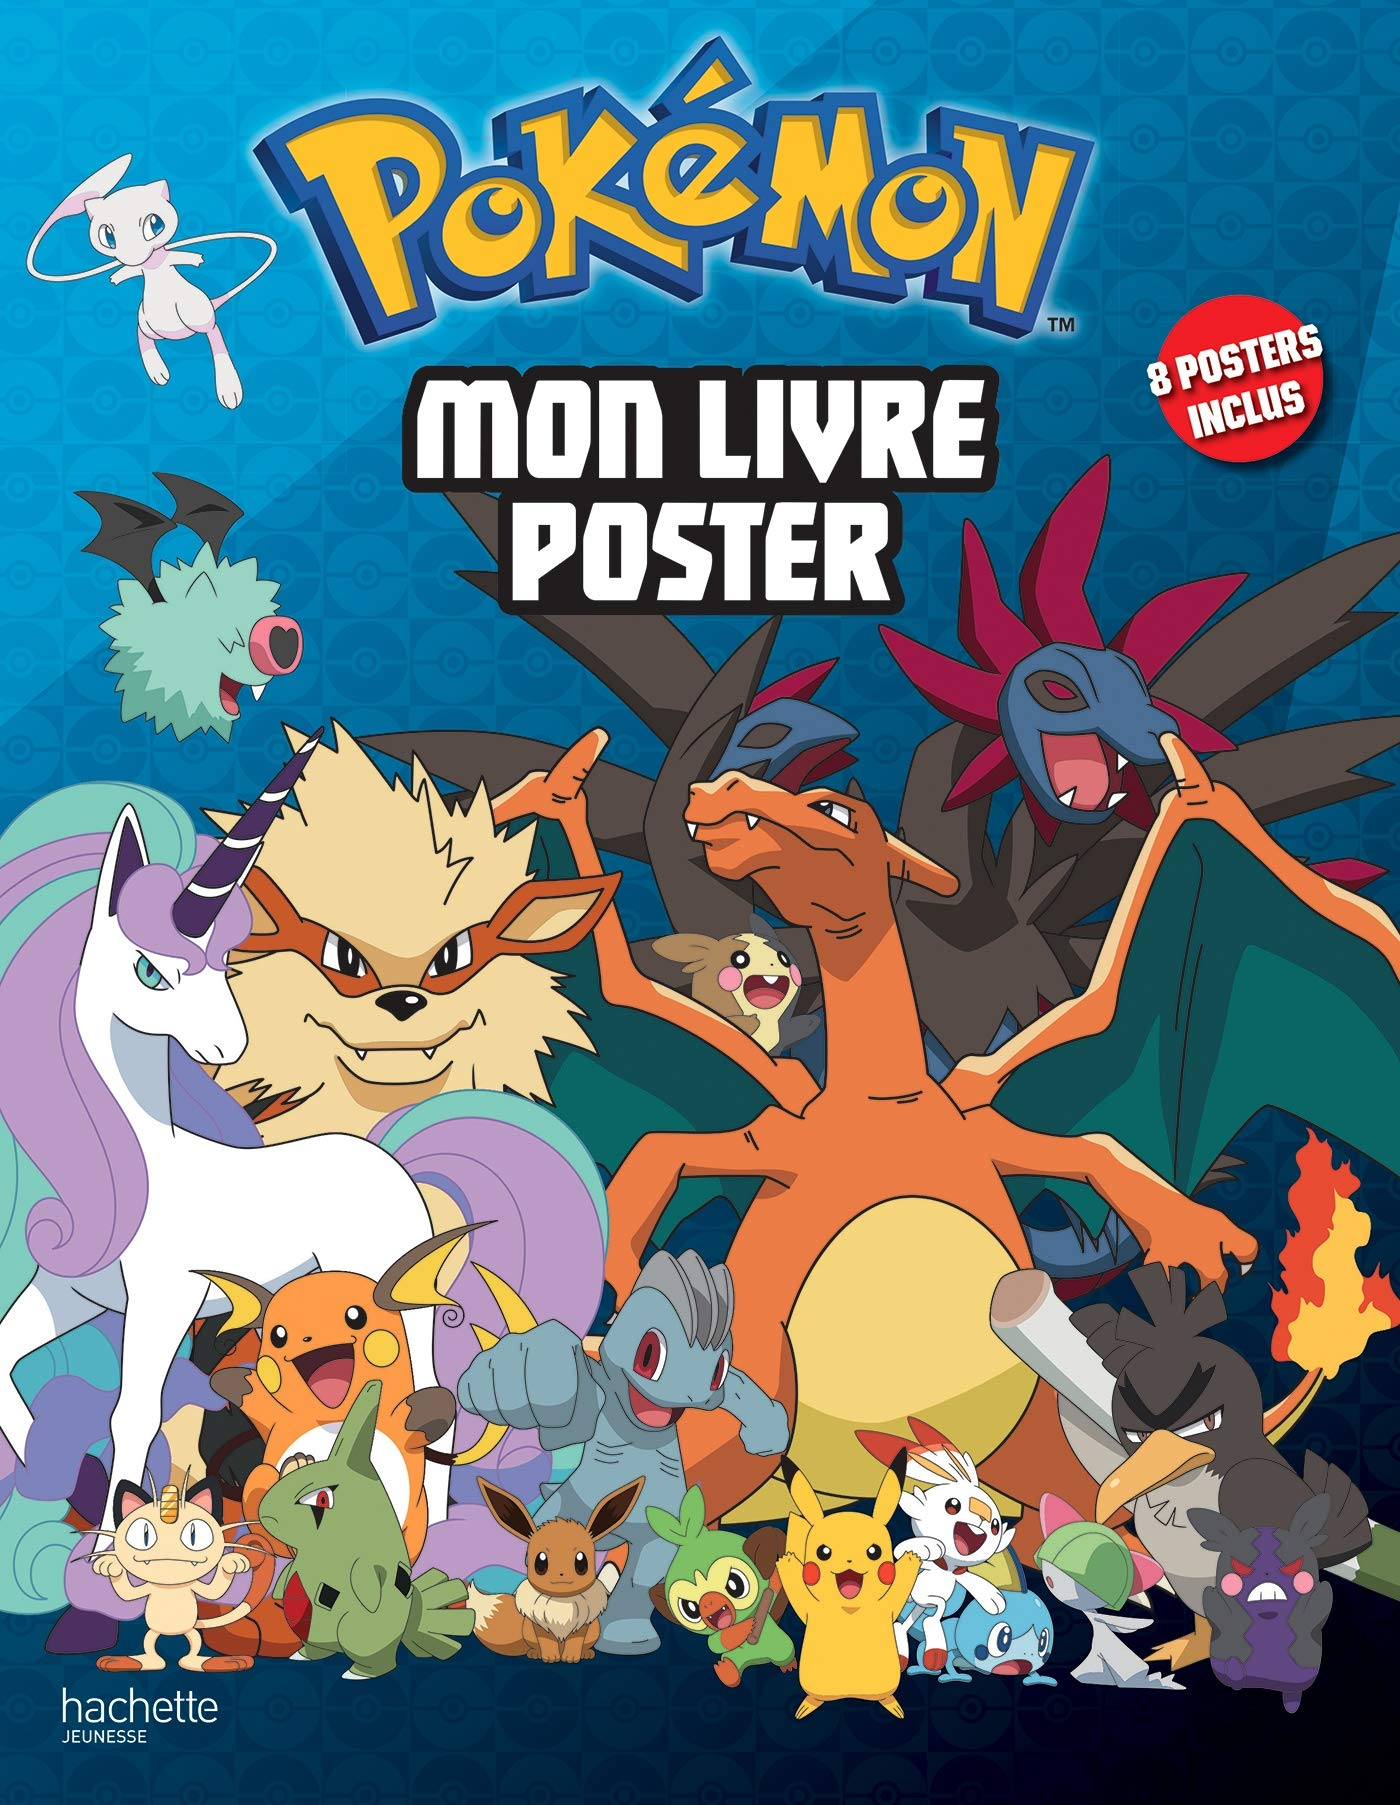 Pokémon : mon livre poster